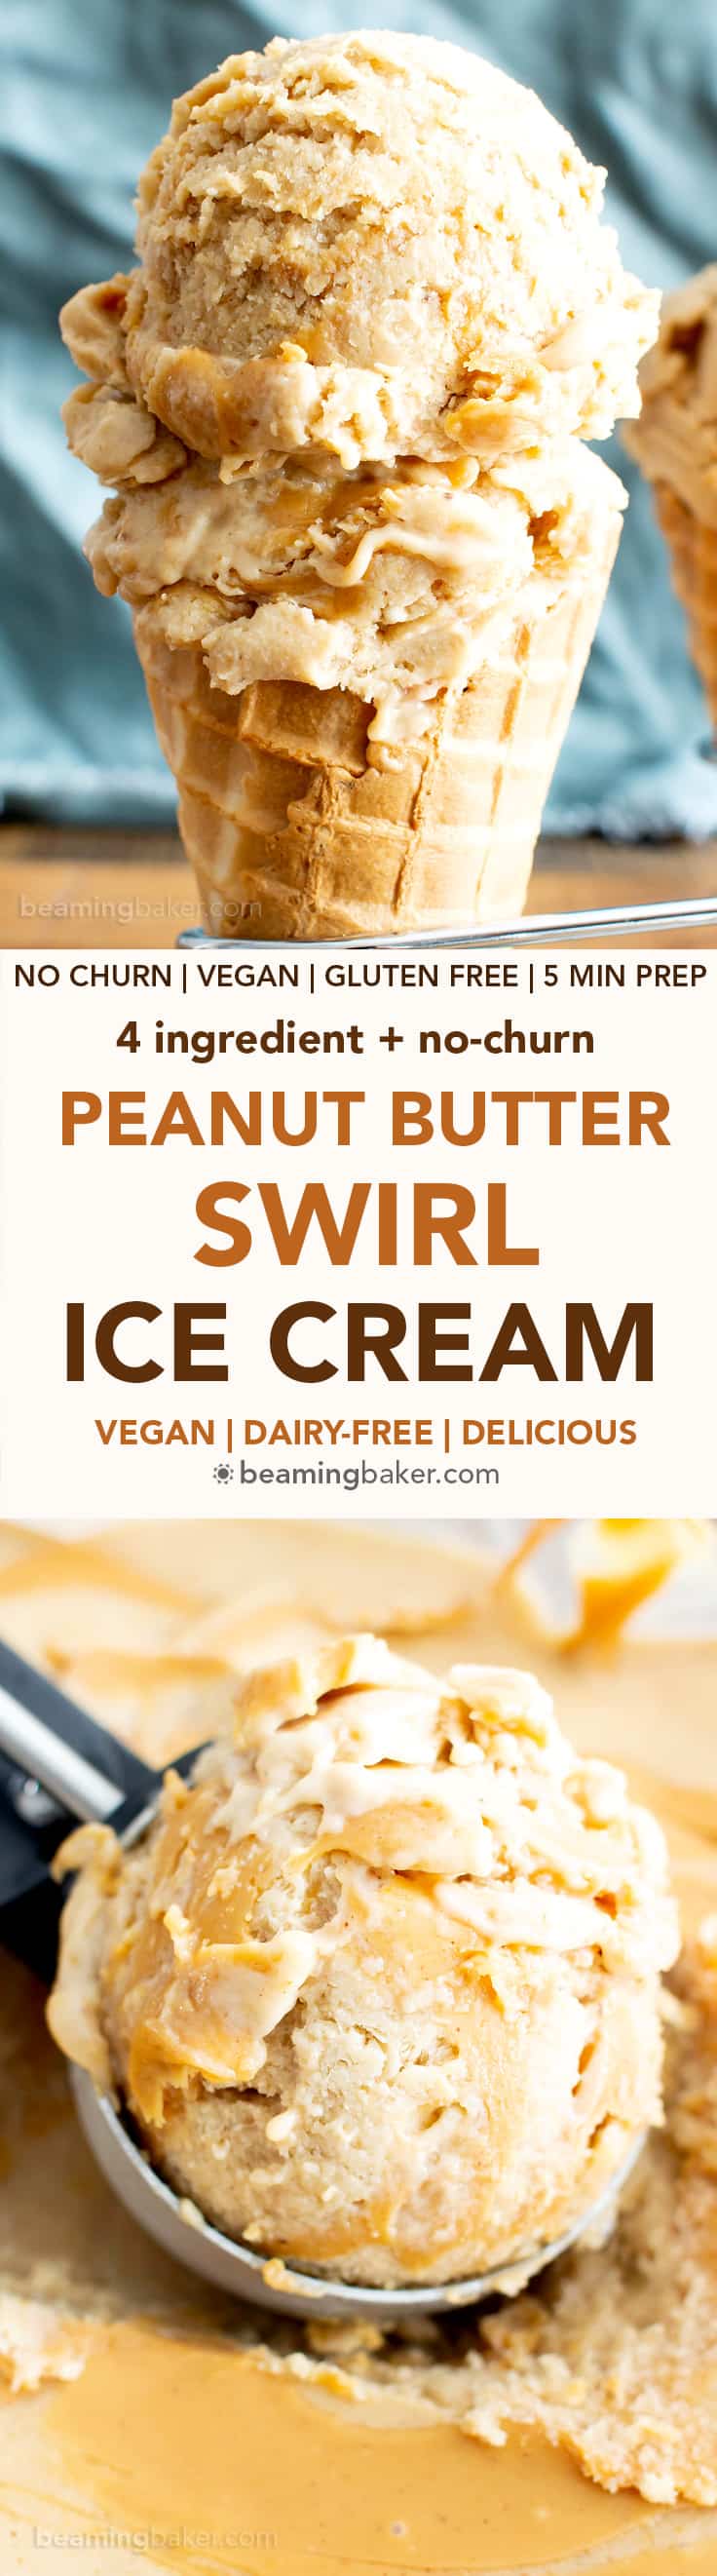 4 Ingredient Banana Peanut Butter Swirl Ice Cream (V, GF): my favorite easy, no-churn recipe for delightfully sweet and creamy vegan ice cream bursting with peanut butter flavor! #Vegan #GlutenFree #DairyFree #PeanutButter #Dessert #IceCream | Recipe on BeamingBaker.com